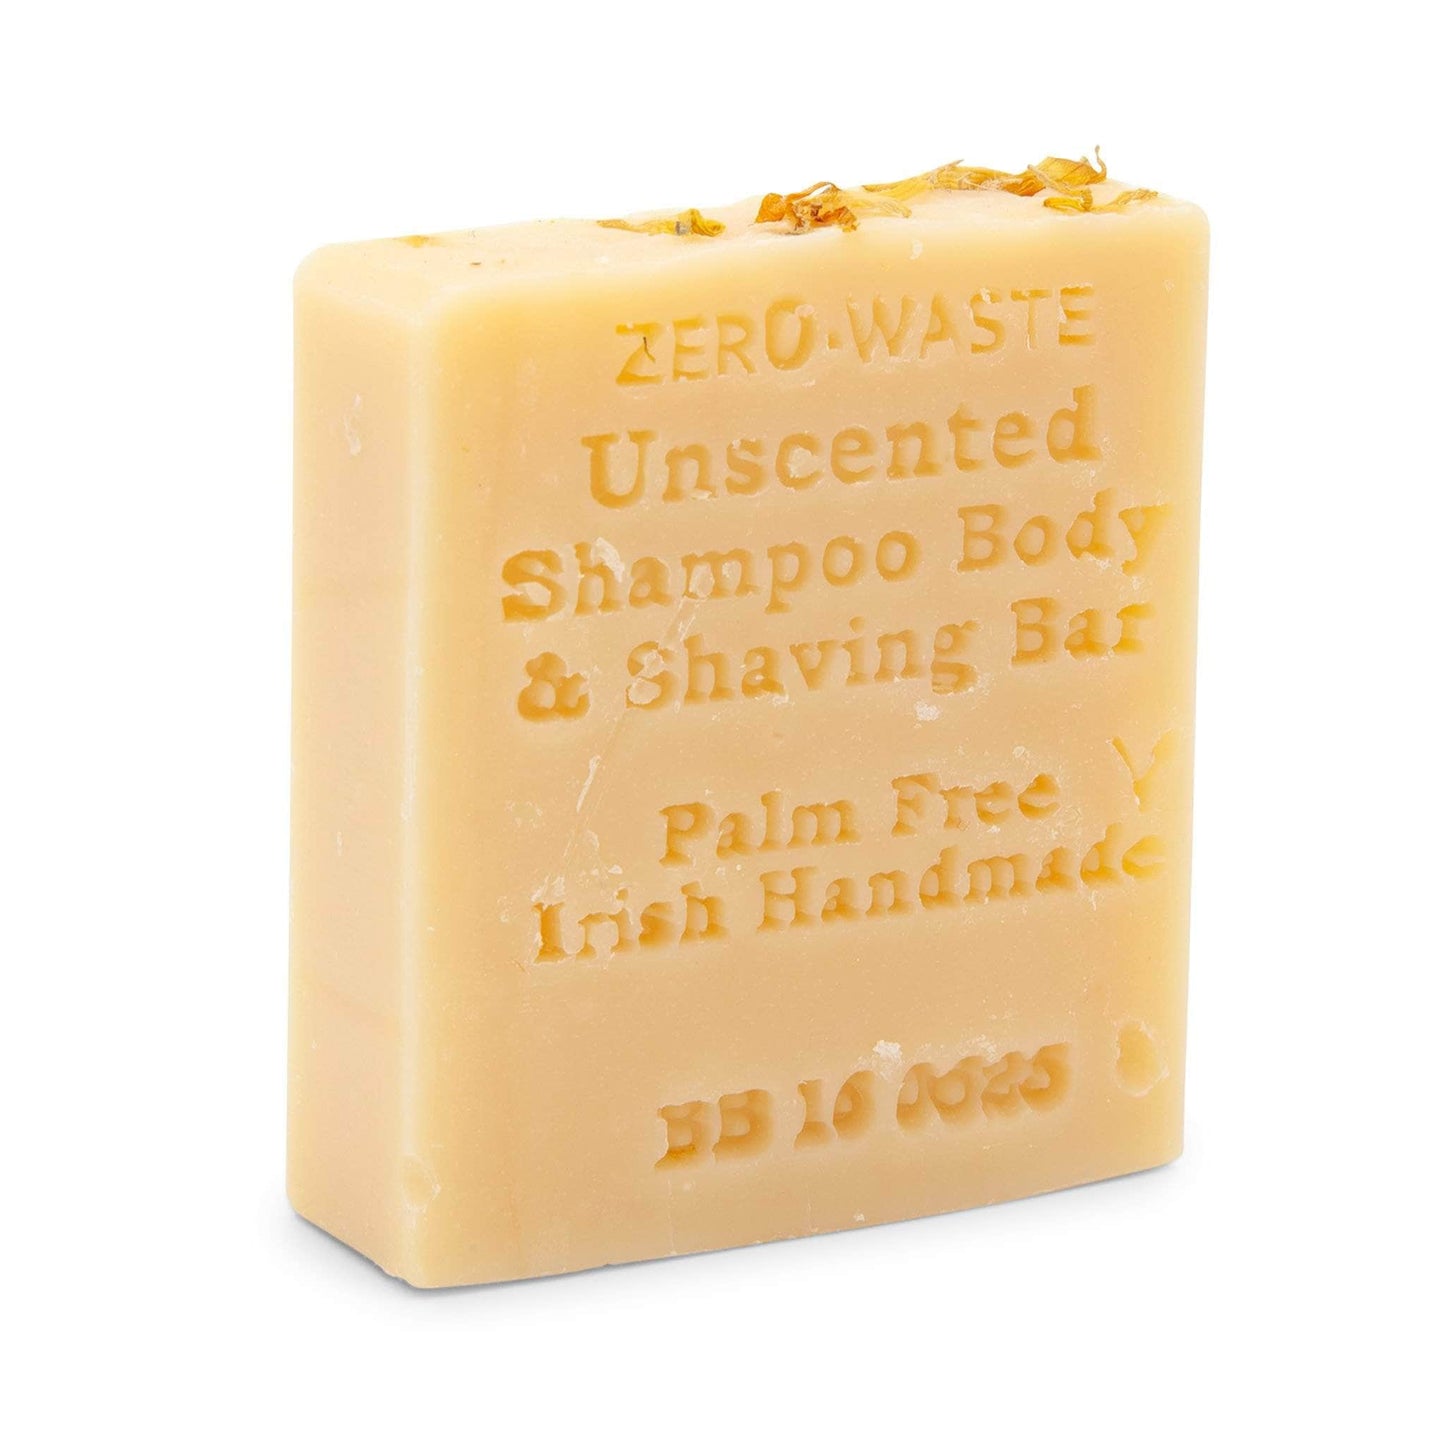 Palm Free Irish Soap Soap Palm Free Zero Waste Handmade Soap - Unscented Shampoo & Shaving Bar